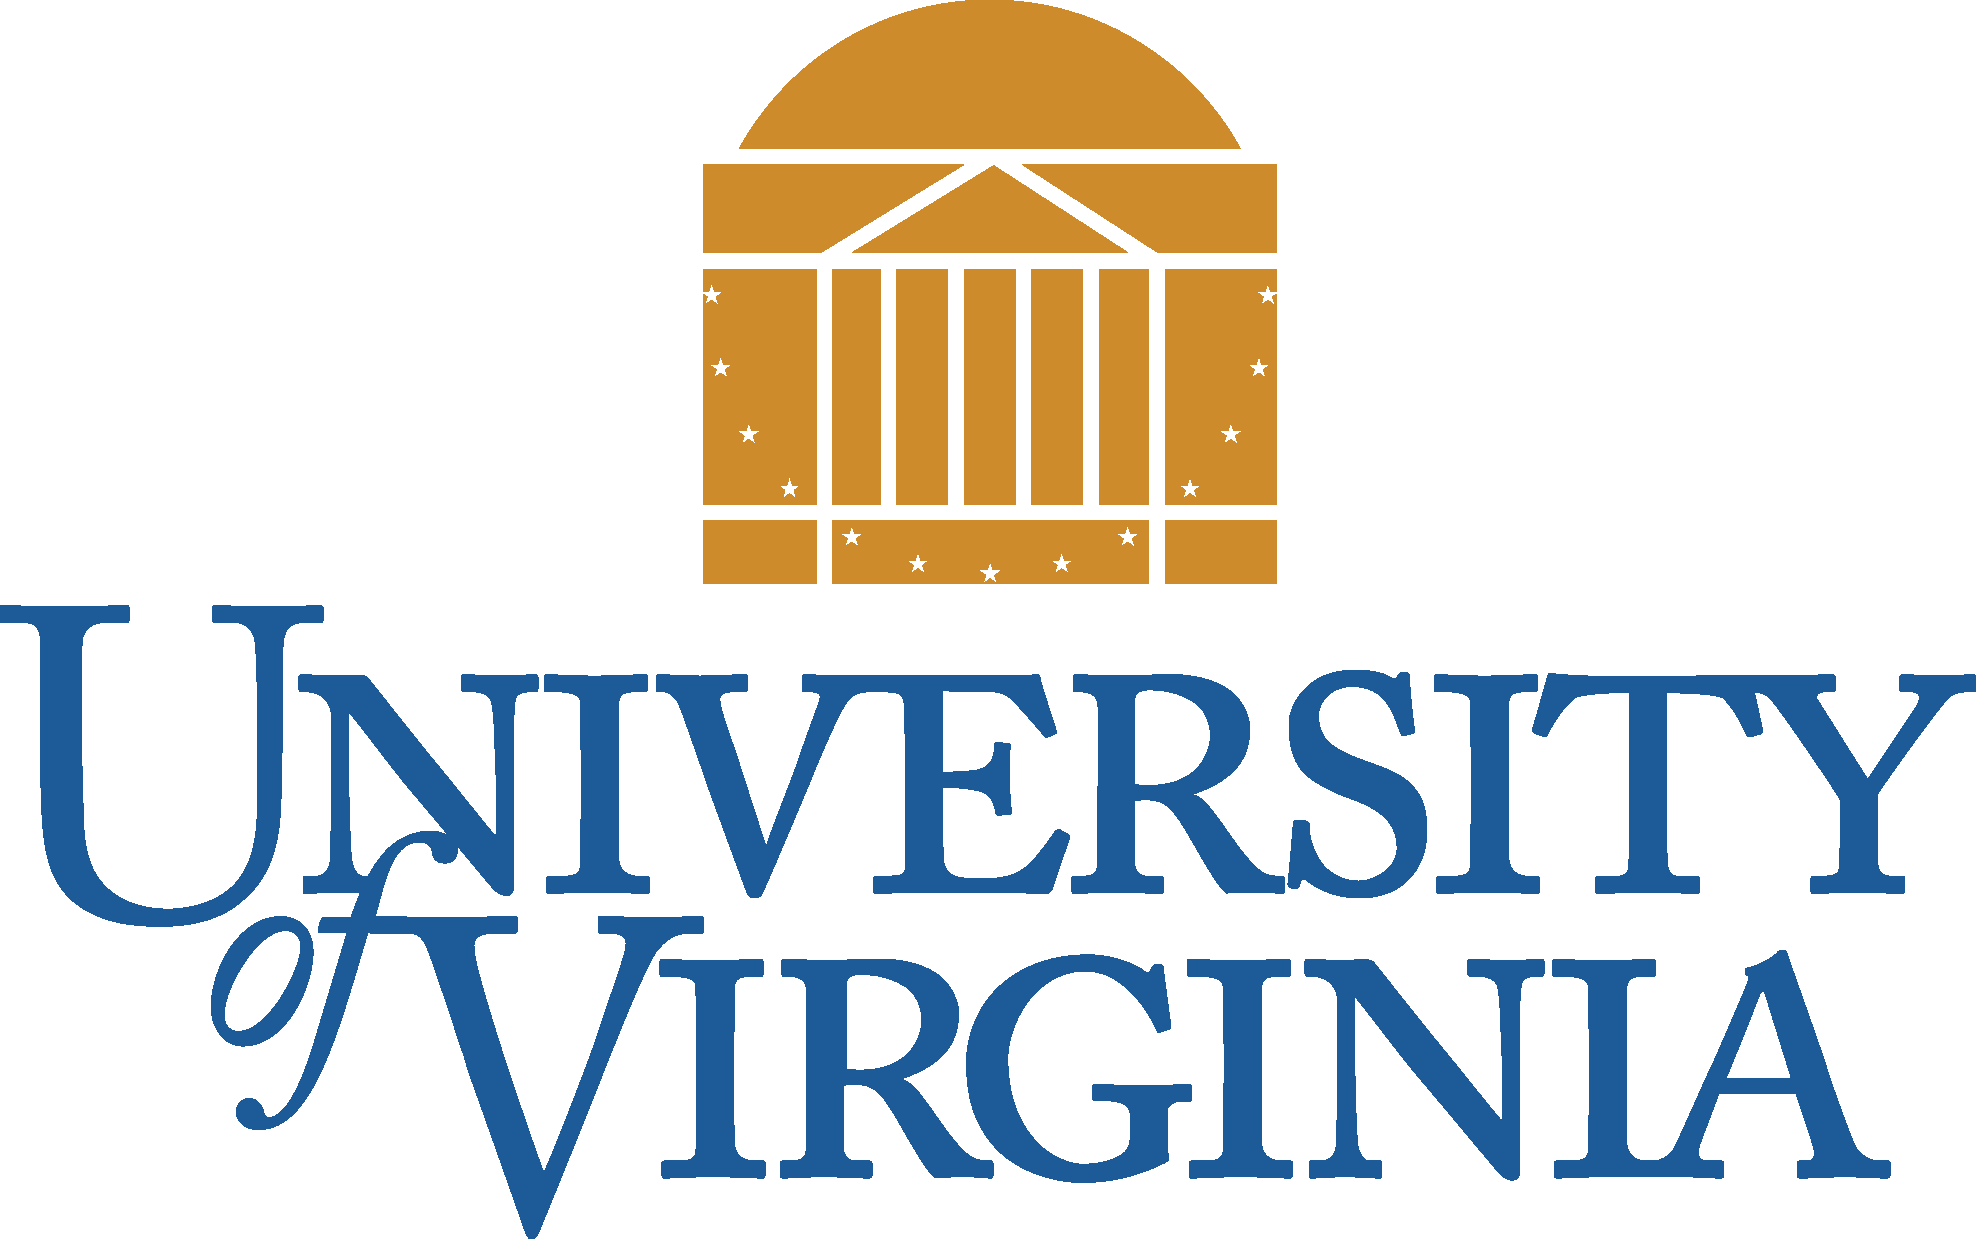 UVA - University of Virginia Logo&Arm&Emblem